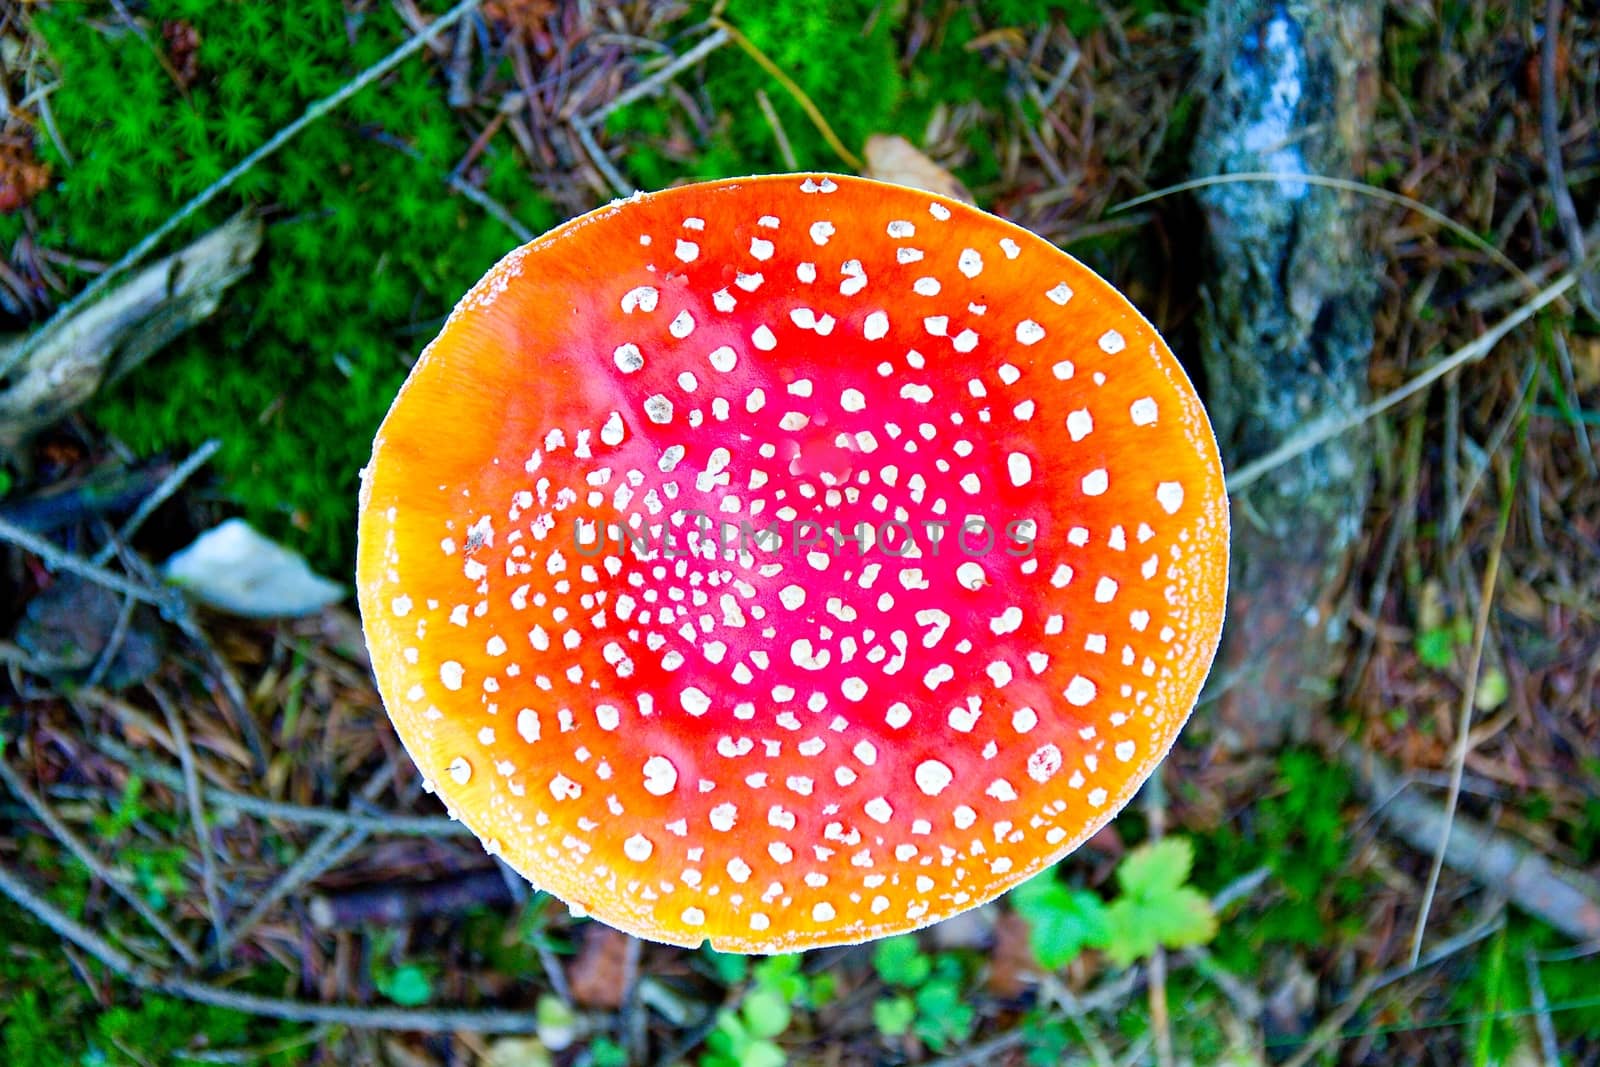 Mushrooms in the wood by Dermot68